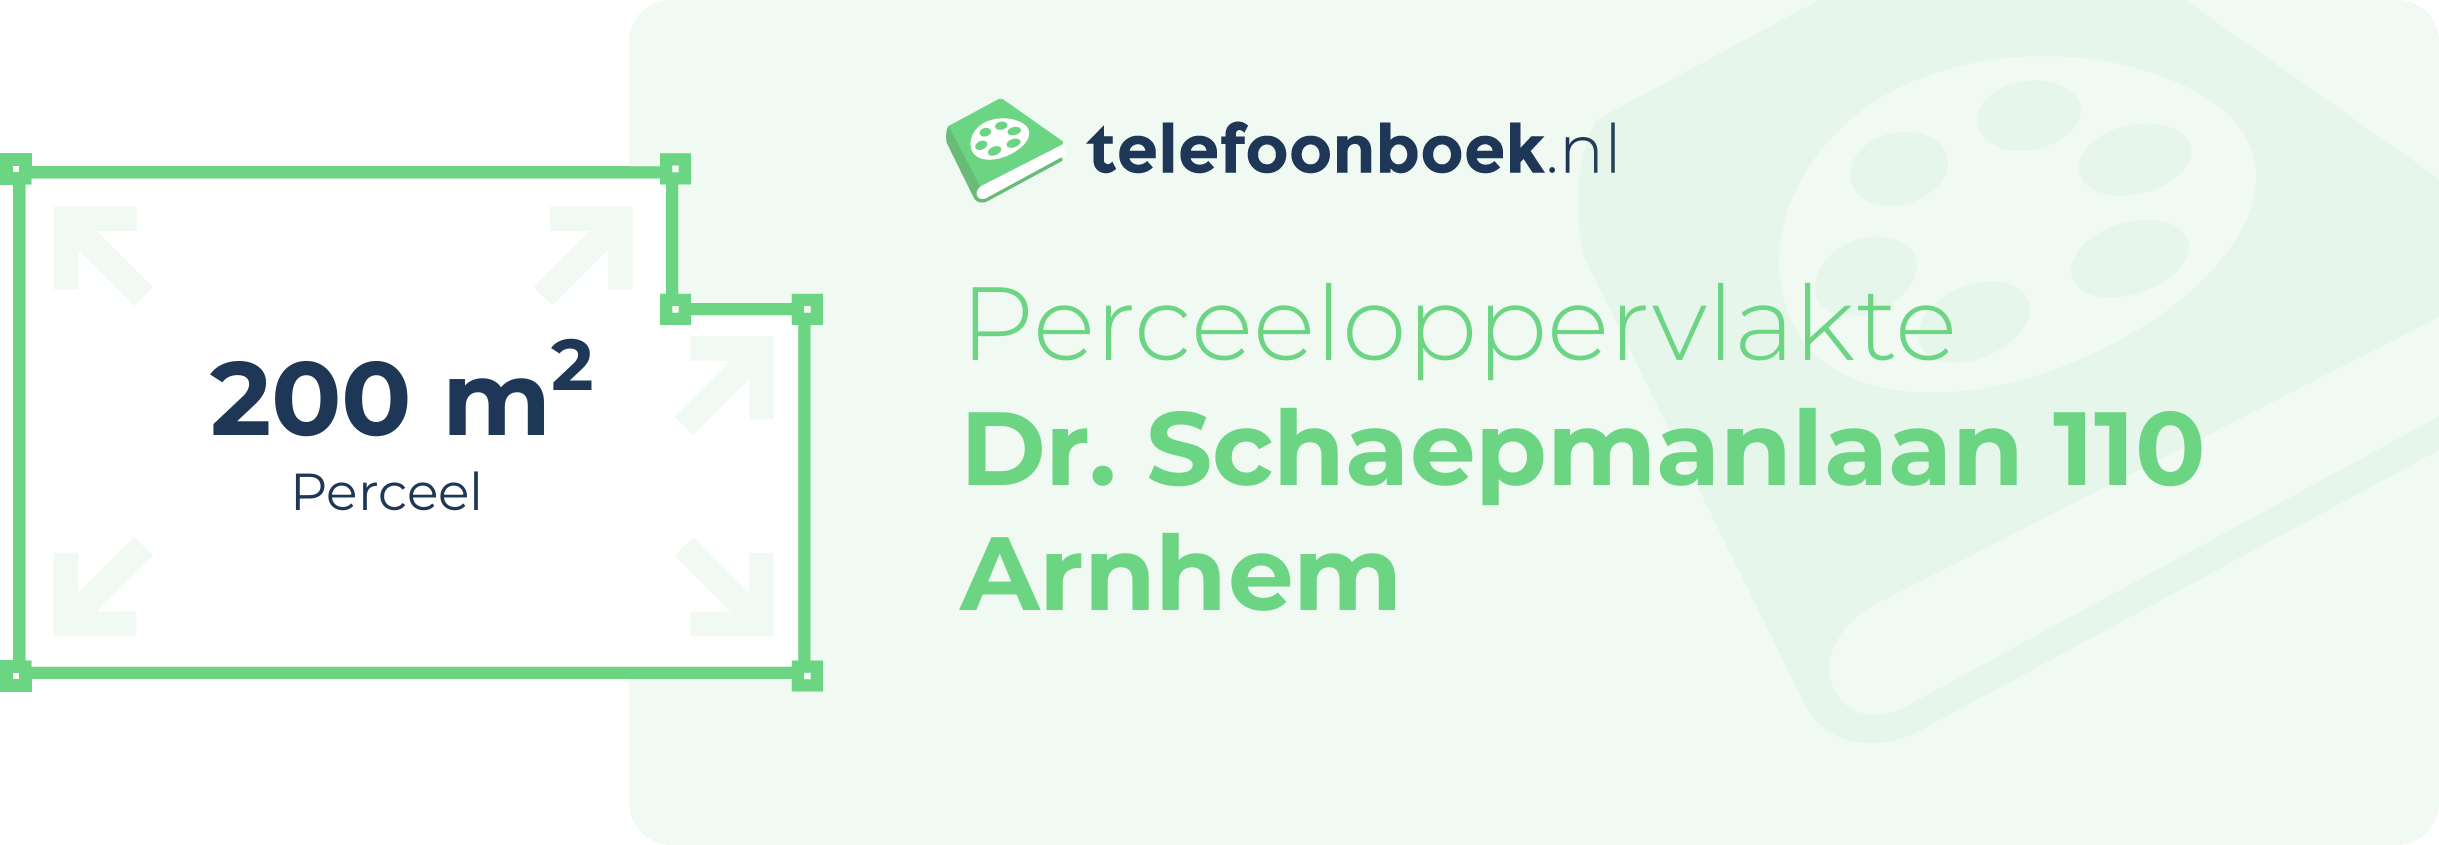 Perceeloppervlakte Dr. Schaepmanlaan 110 Arnhem